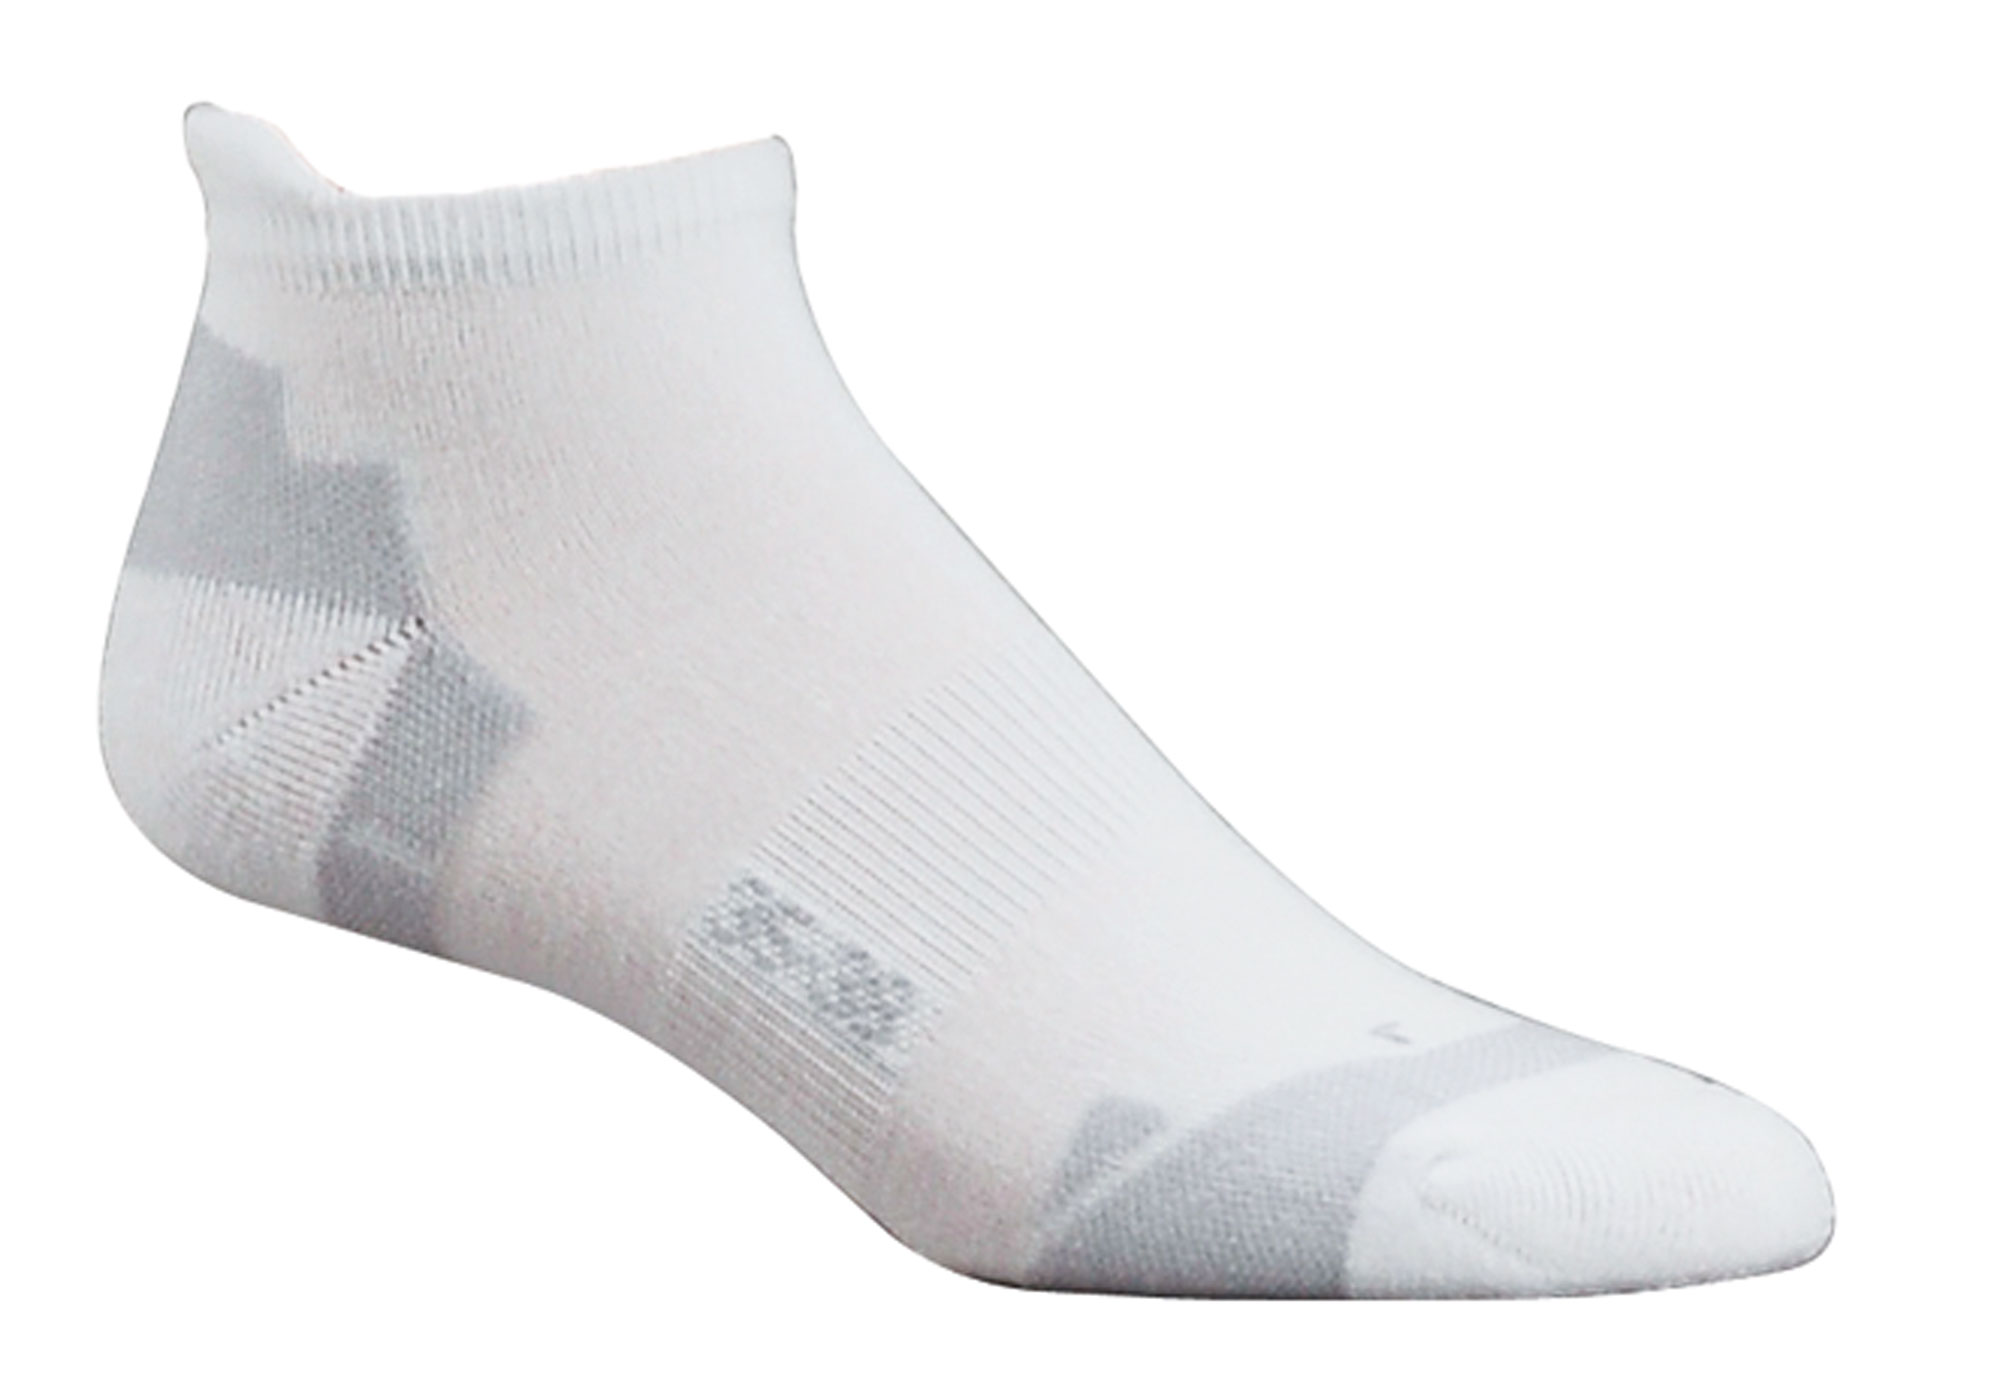 Sneakers-Sport-Socken mit Spezial-Polstern an Fußspitze und Ferse   3 Paar